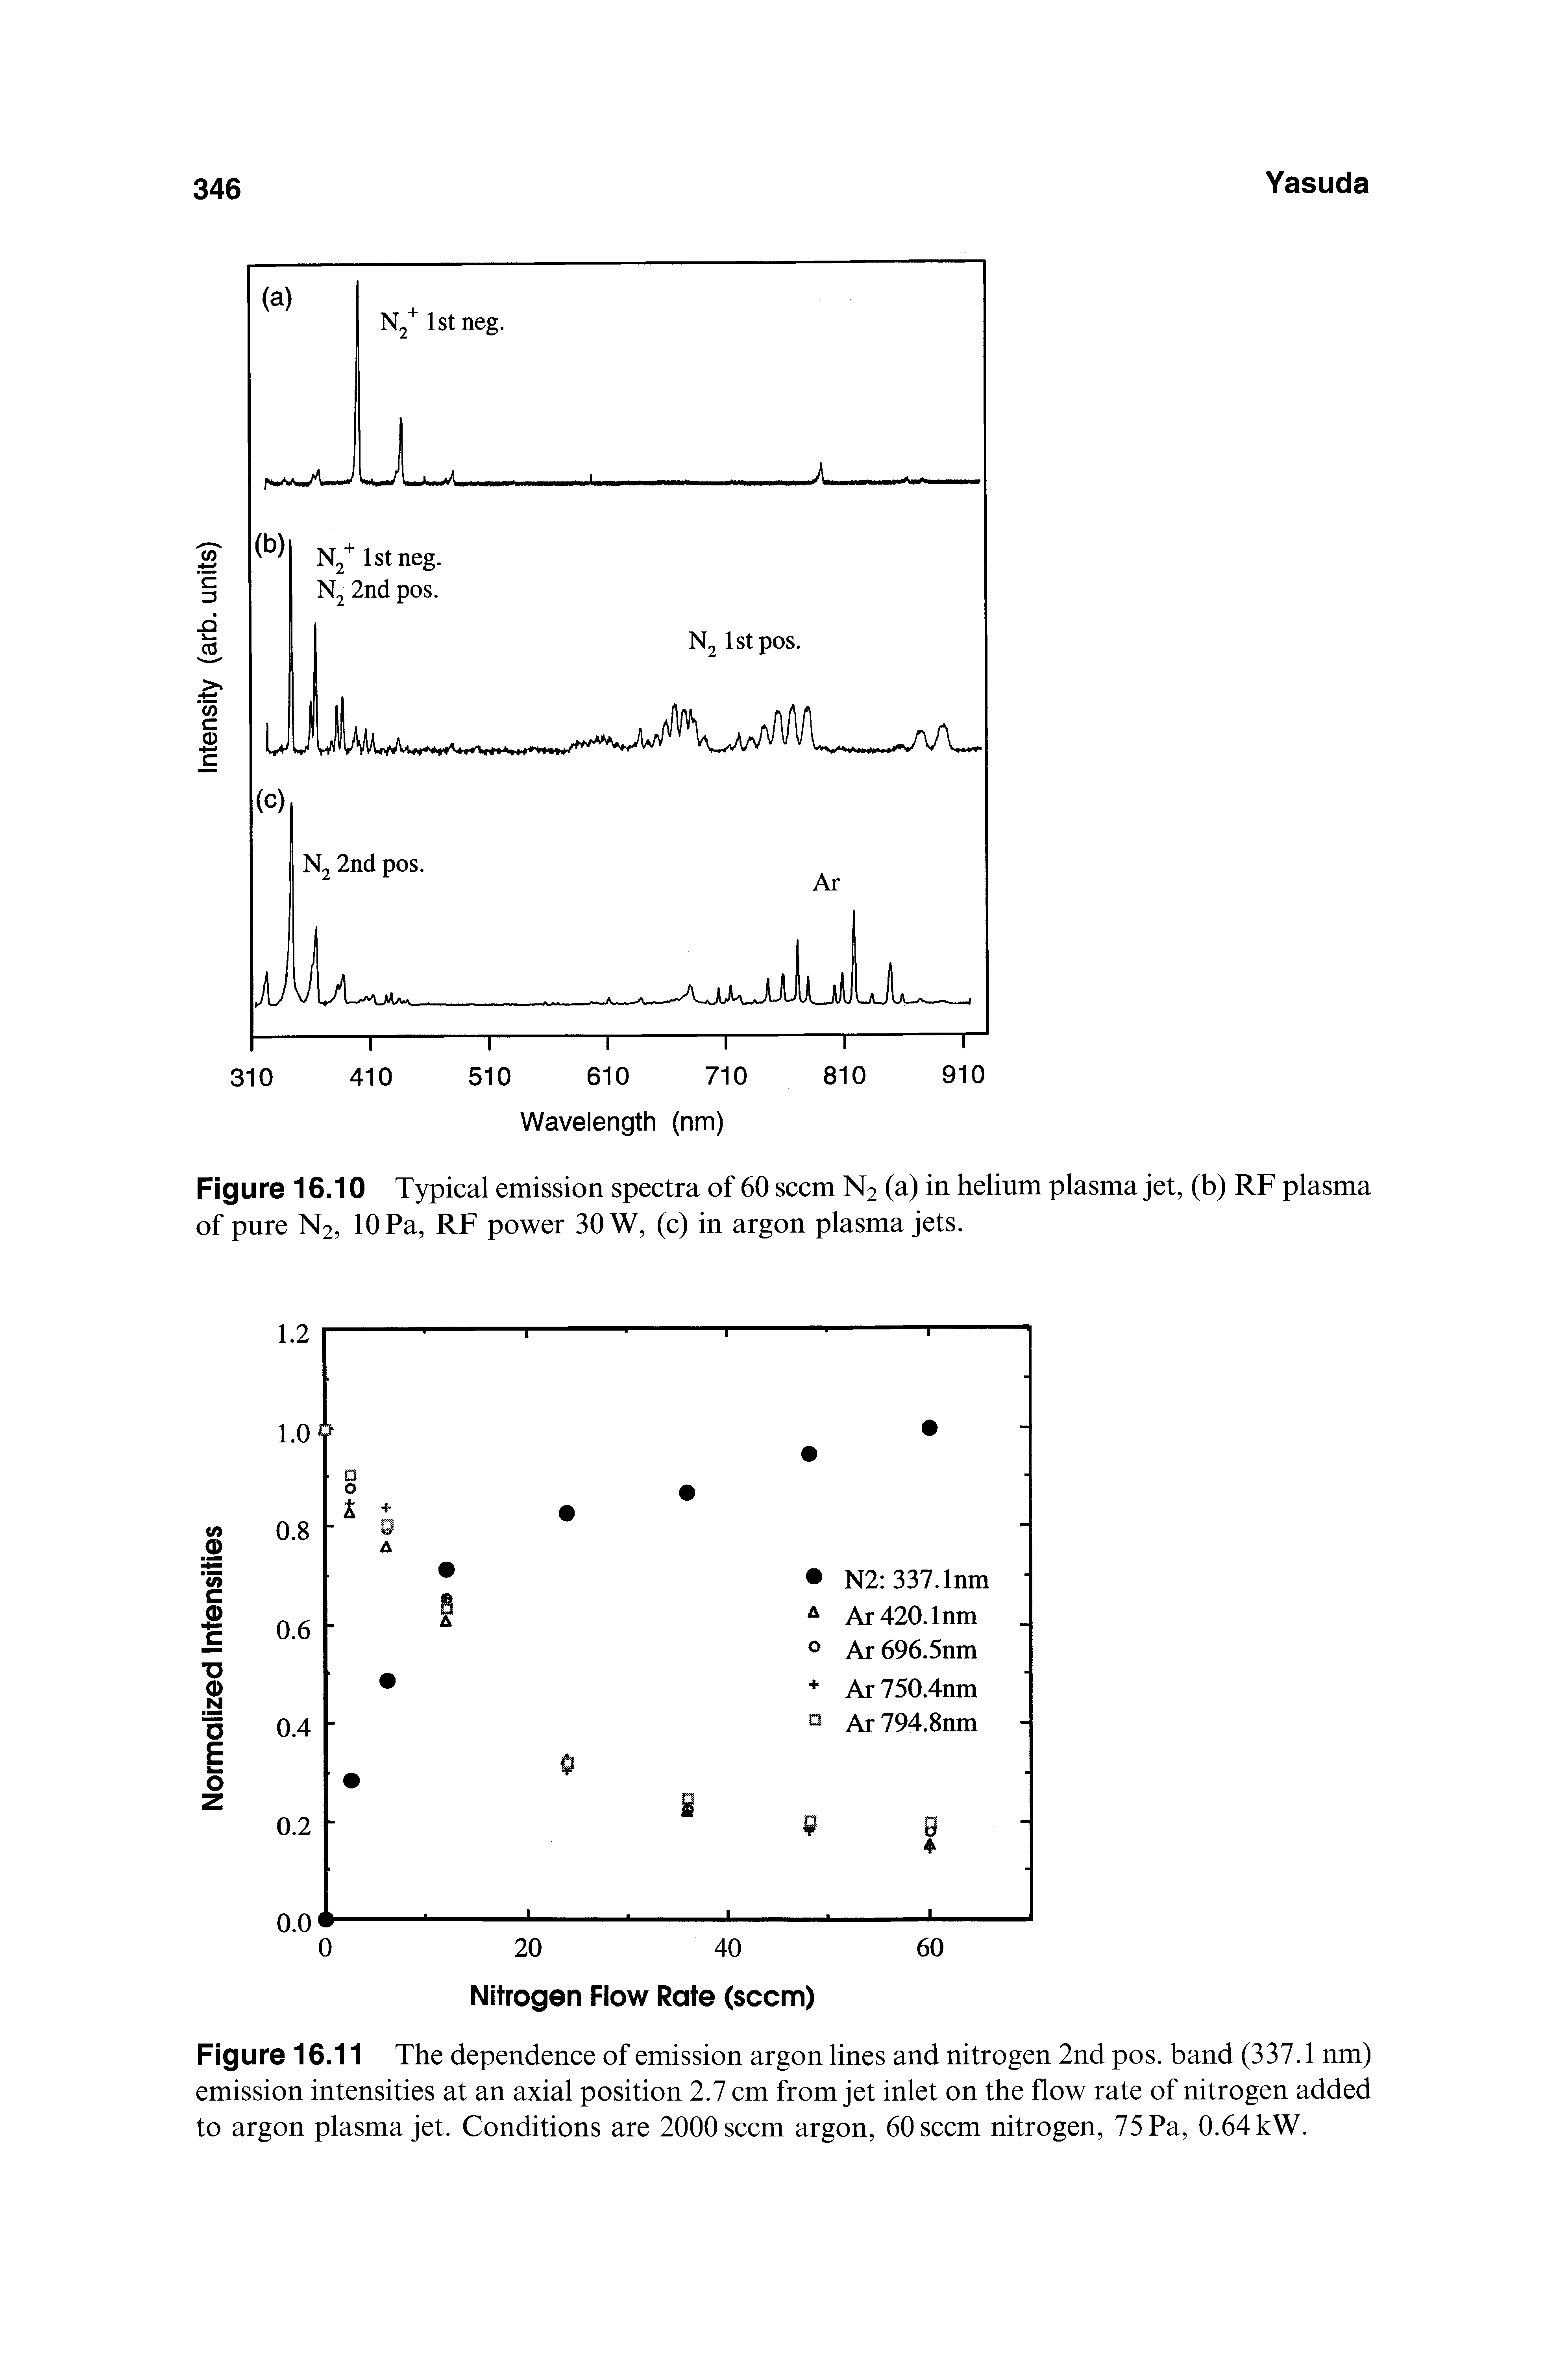 Figure 16.10 Typical emission spectra of 60 seem N2 (a) in helium plasma jet, (b) RF plasma of pure N2, 10 Pa, RF power SOW, (c) in argon plasma jets.